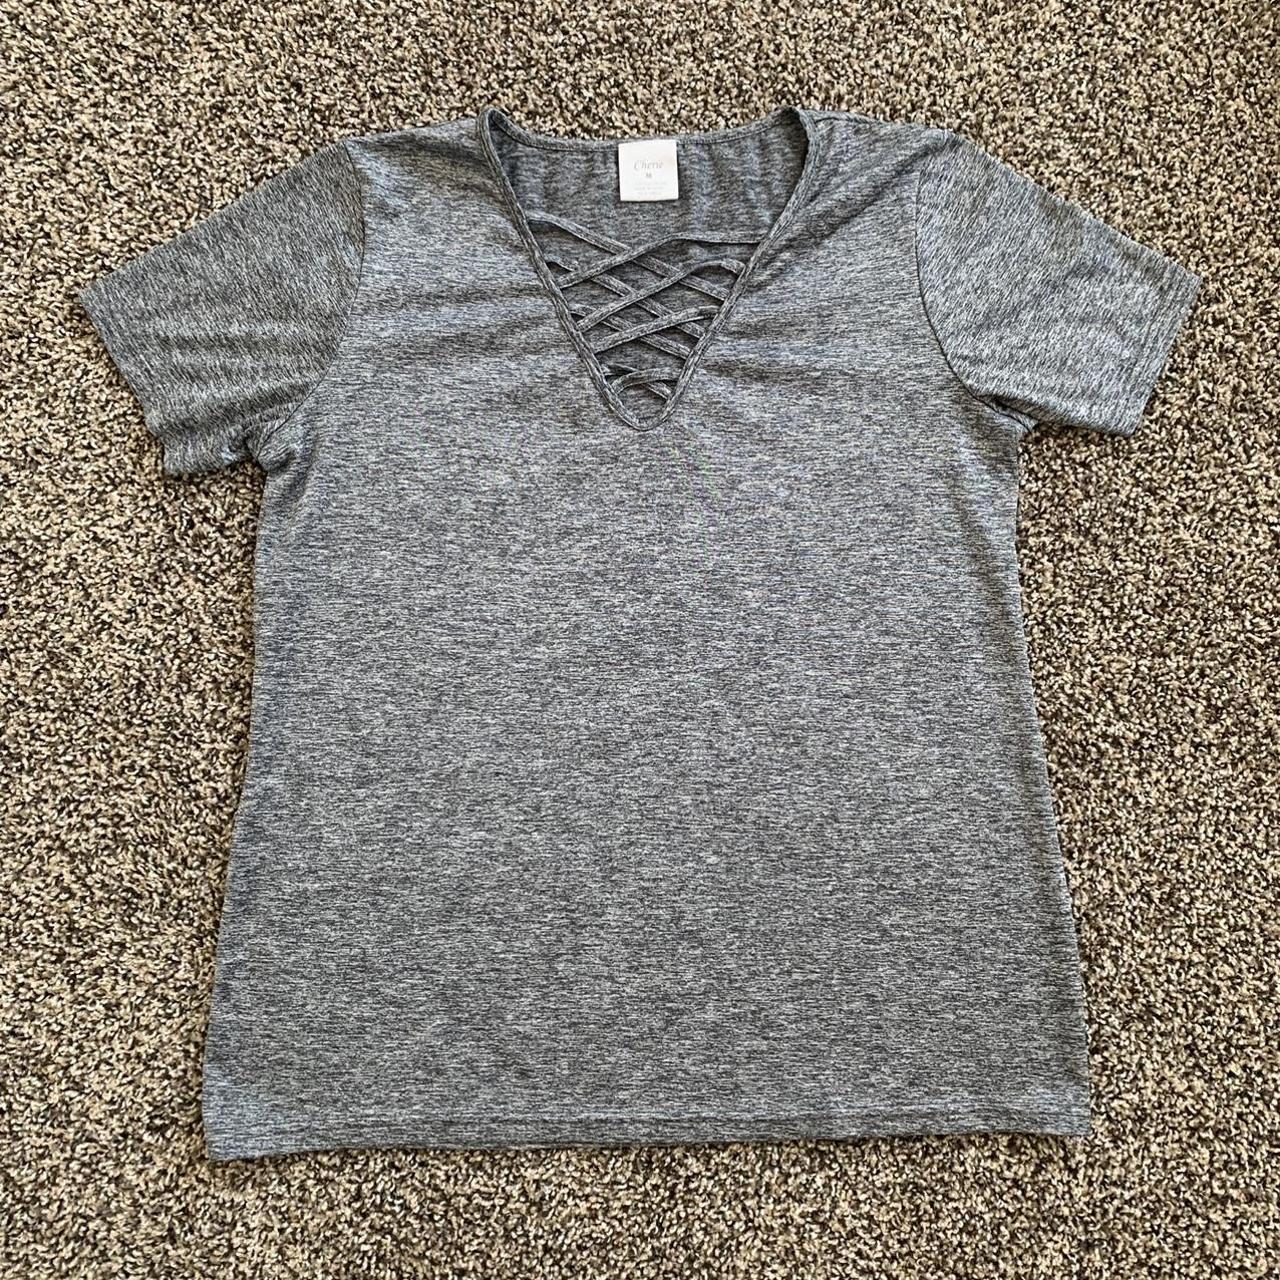 Cherie Amie Women's Grey and Black T-shirt (4)